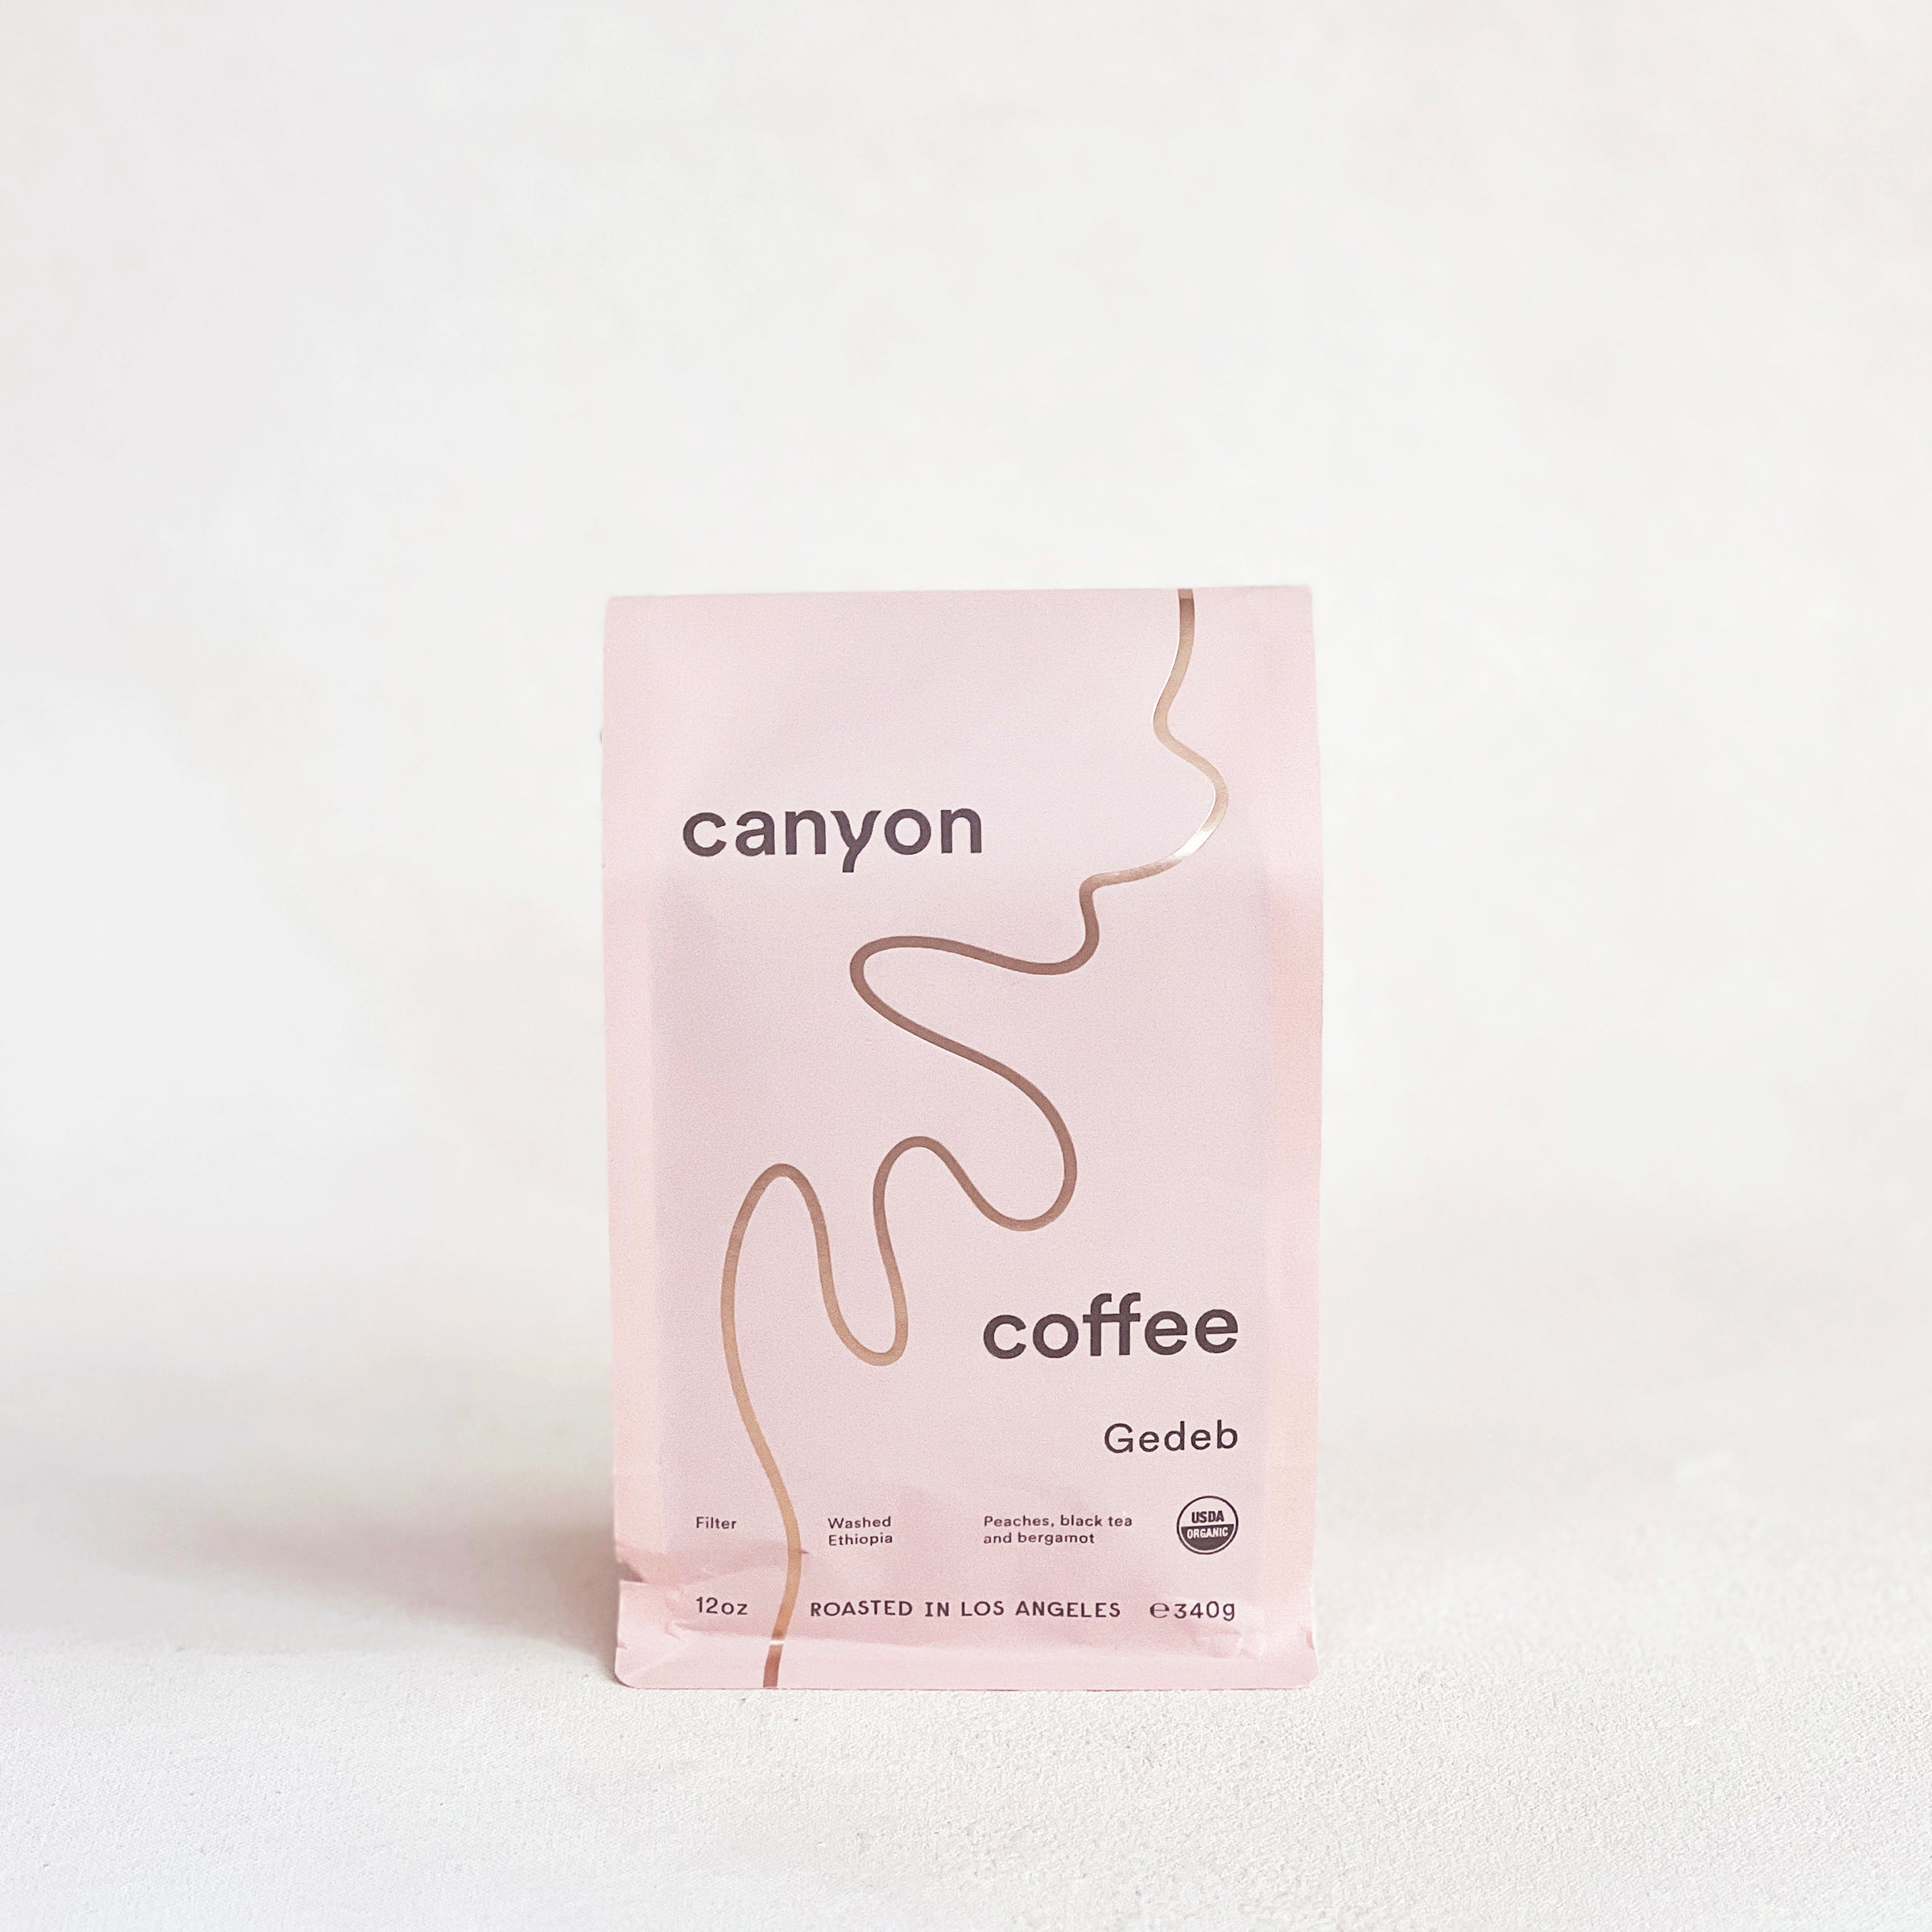 Gedeb Canyon Coffee